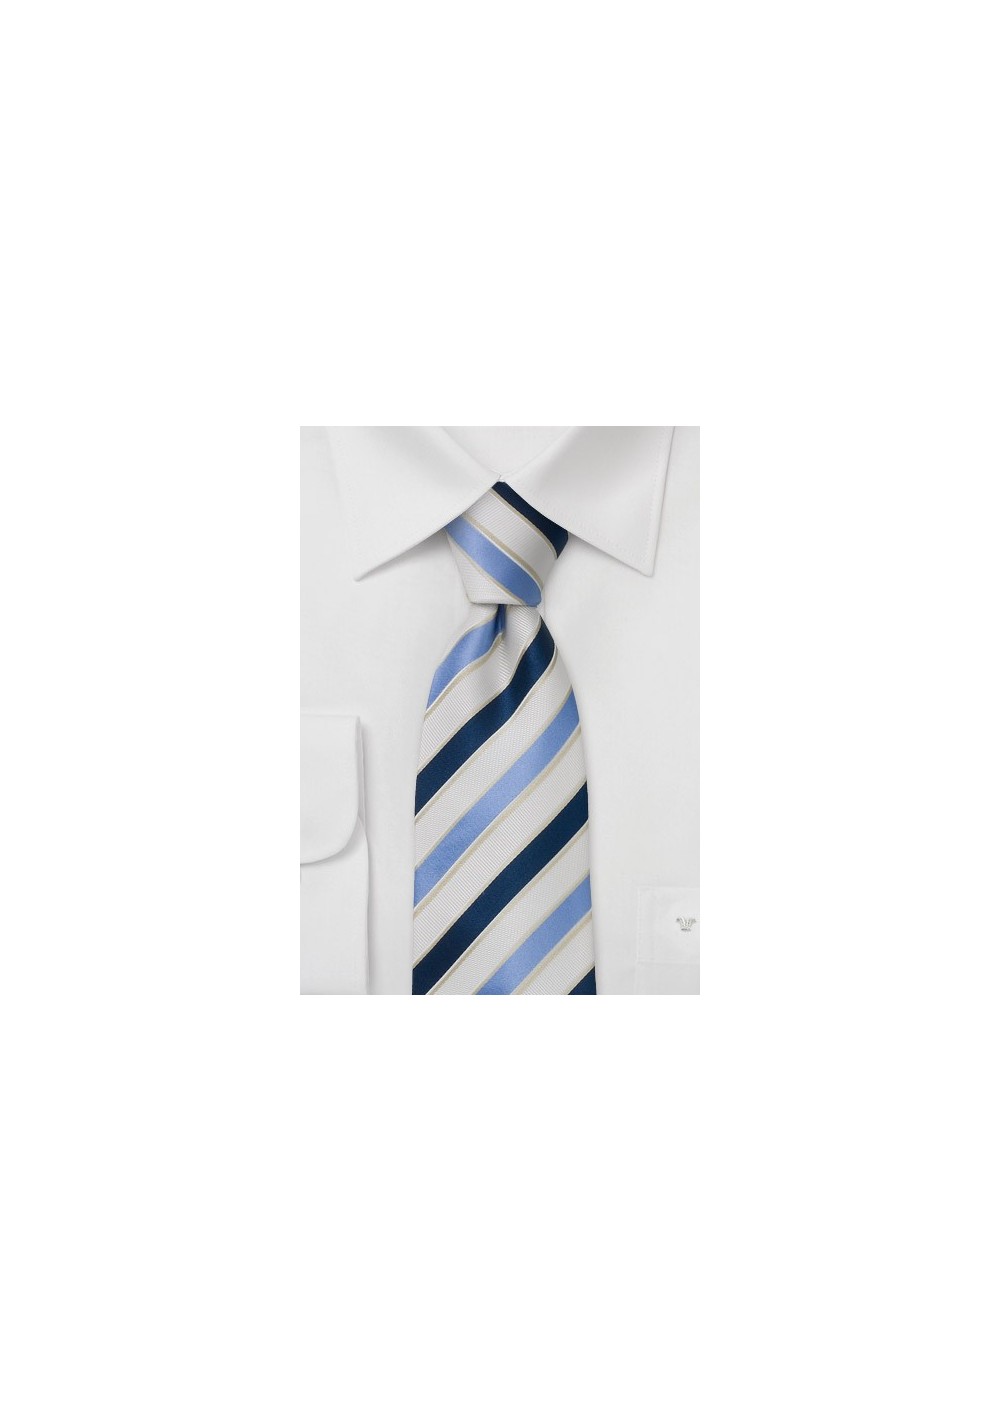 Silktie with wide stripes in blue & white